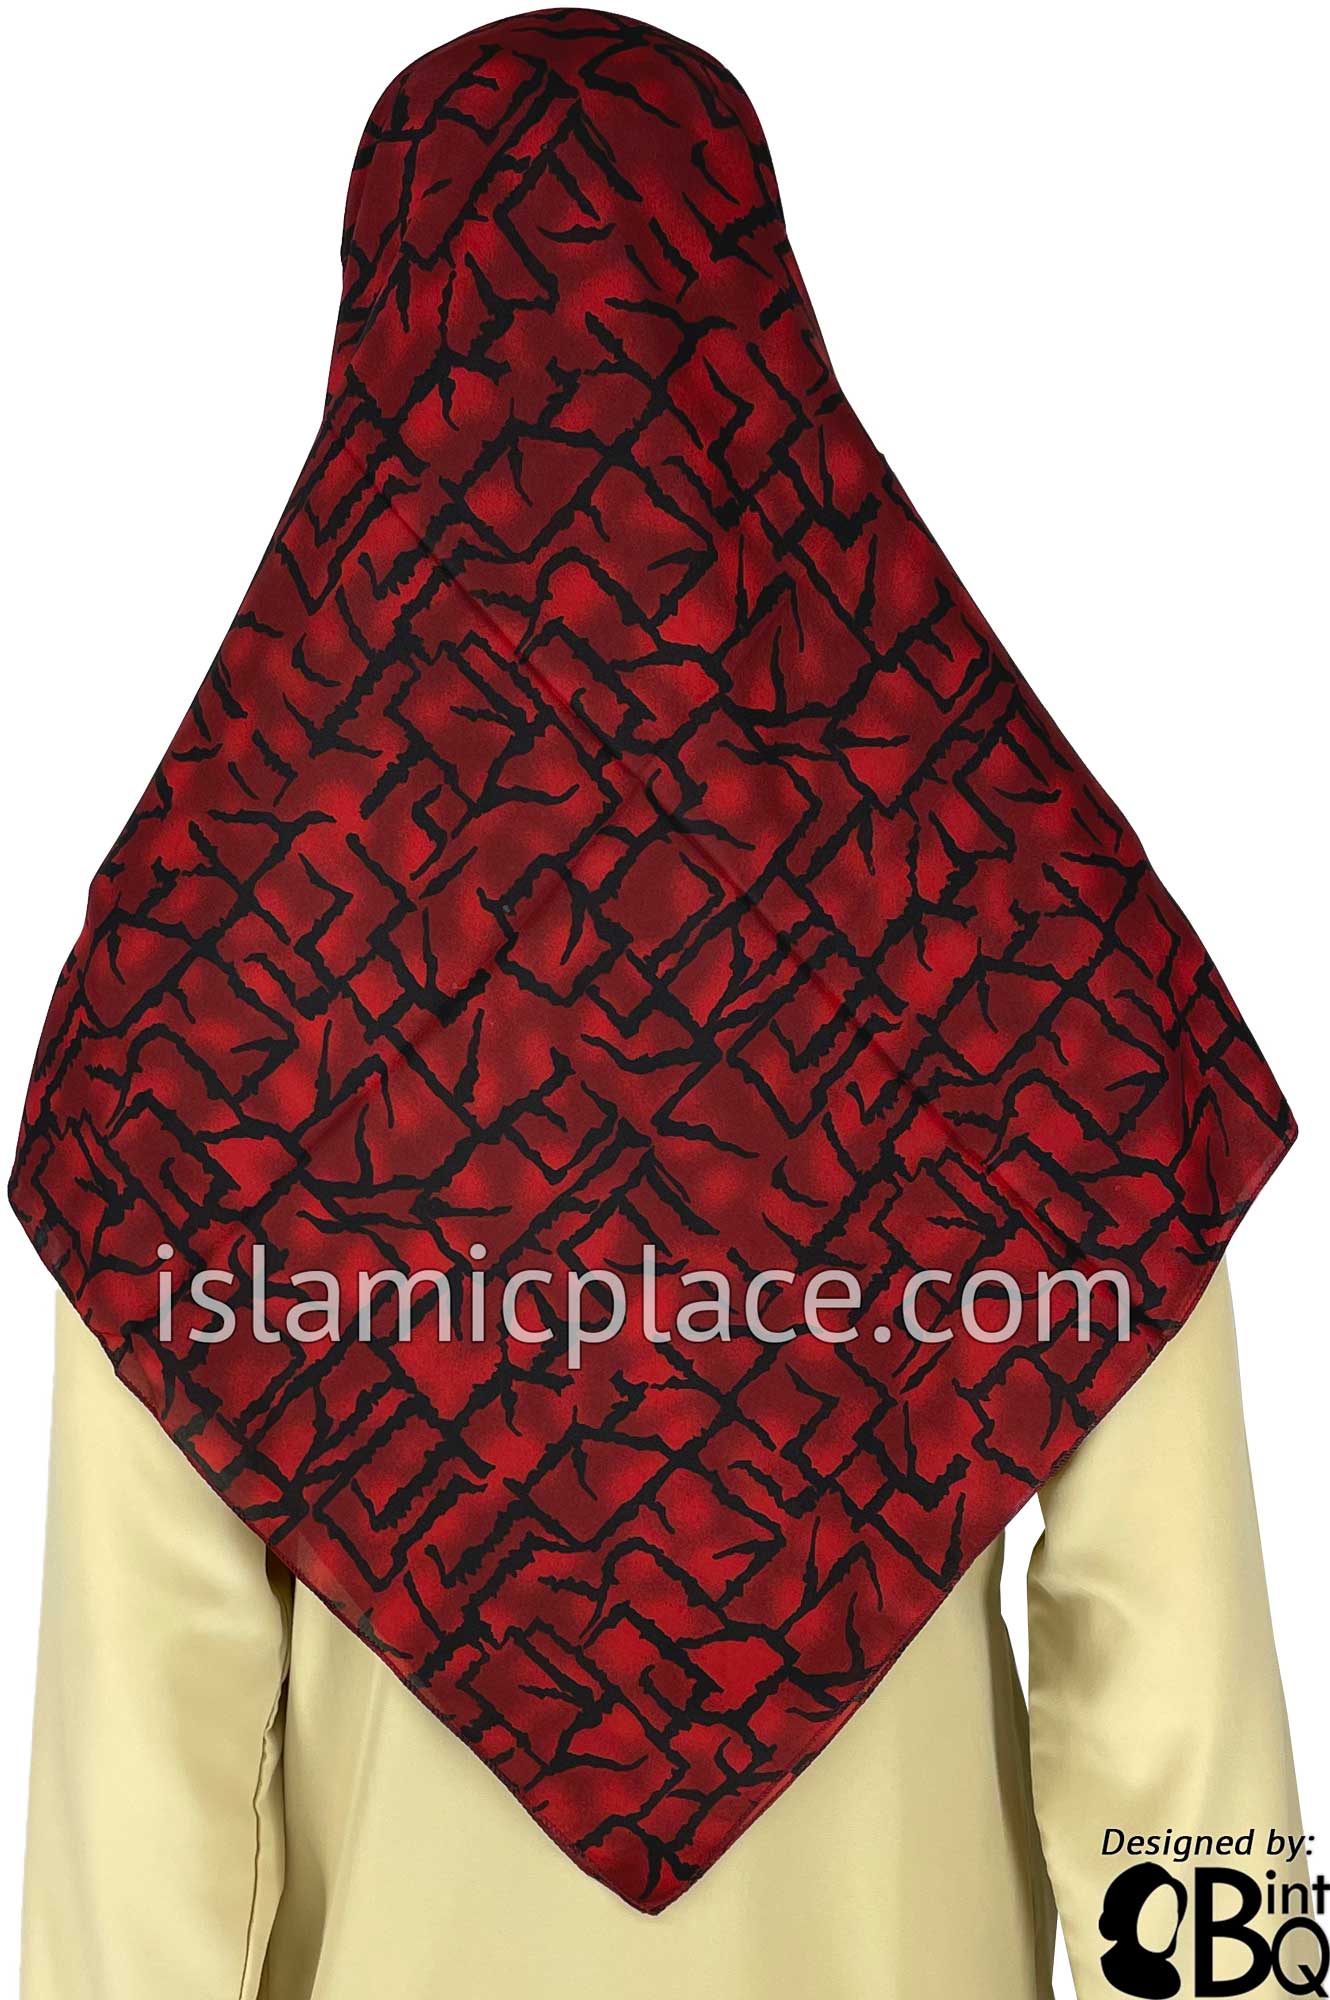 Red, Burgundy and Black Crackle Maze - 45" Square Printed Khimar